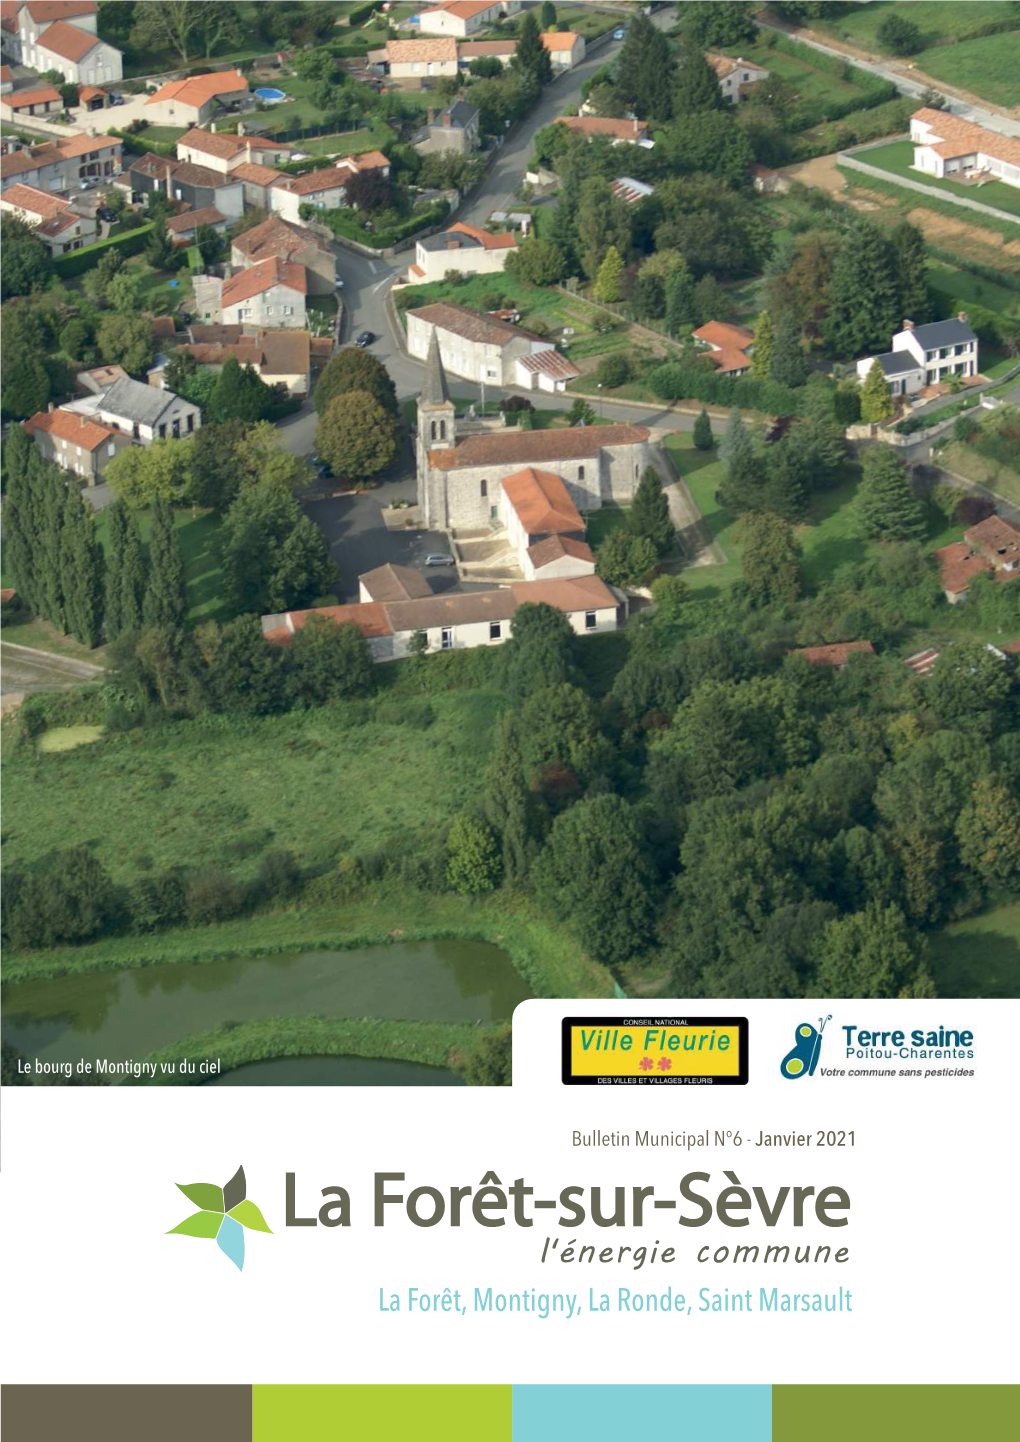 La Forêt, Montigny, La Ronde, Saint Marsault